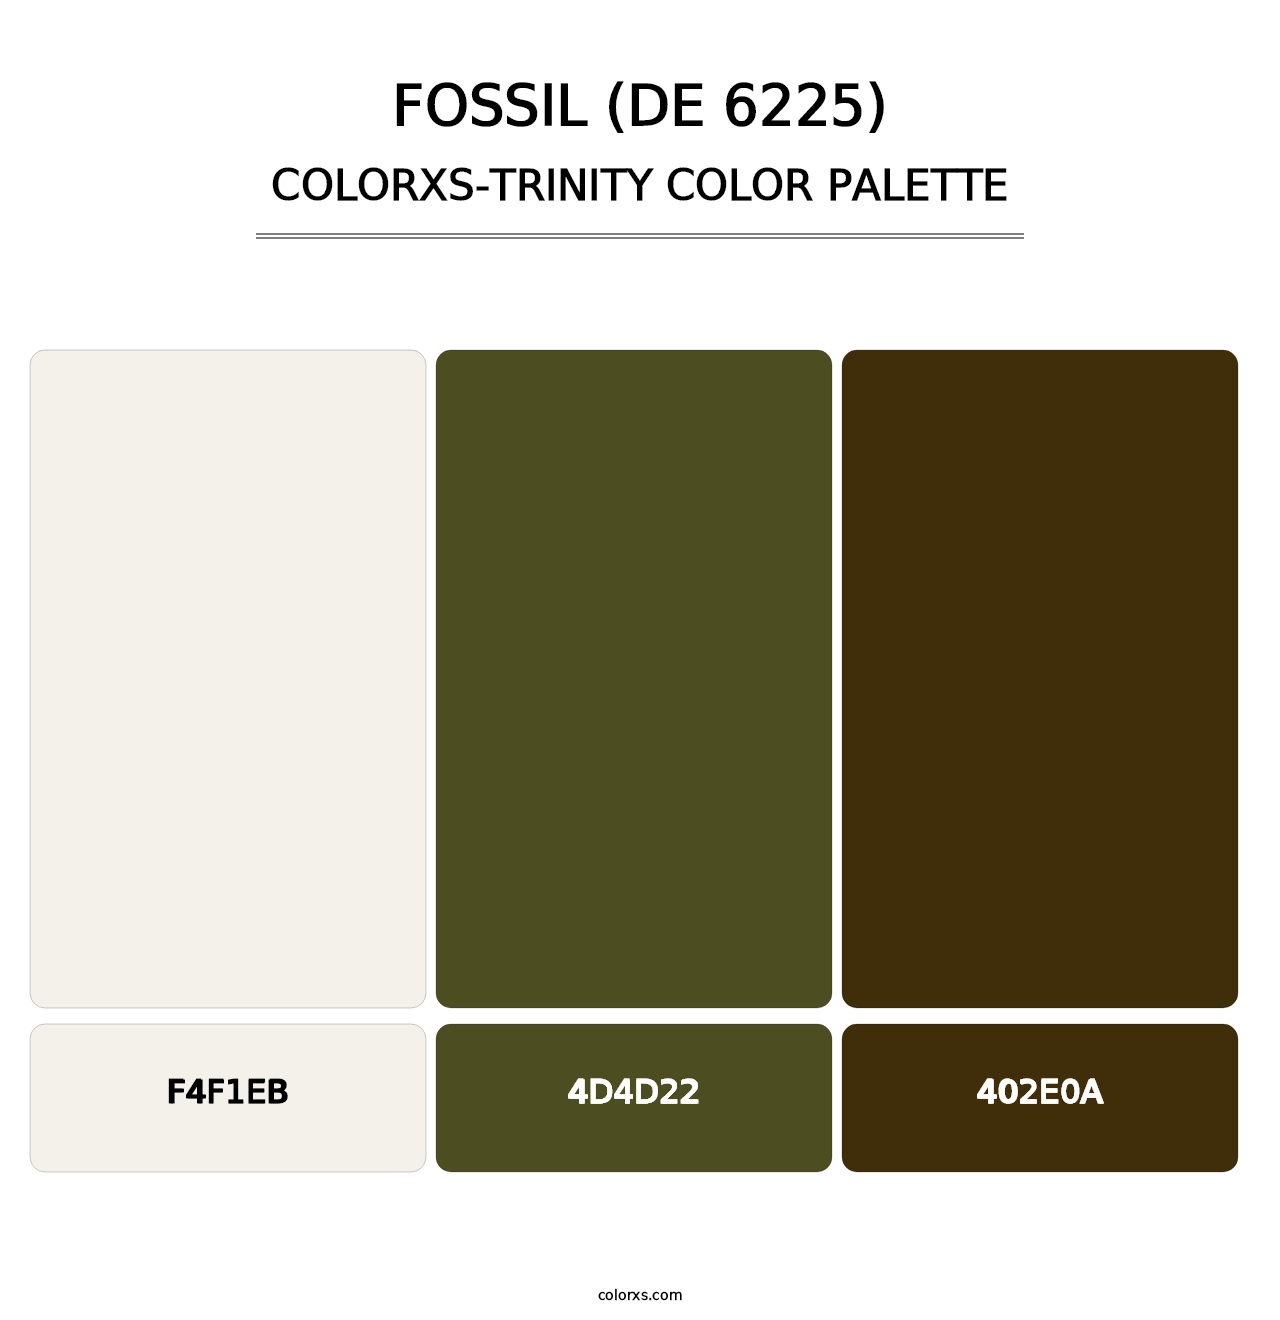 Fossil (DE 6225) - Colorxs Trinity Palette